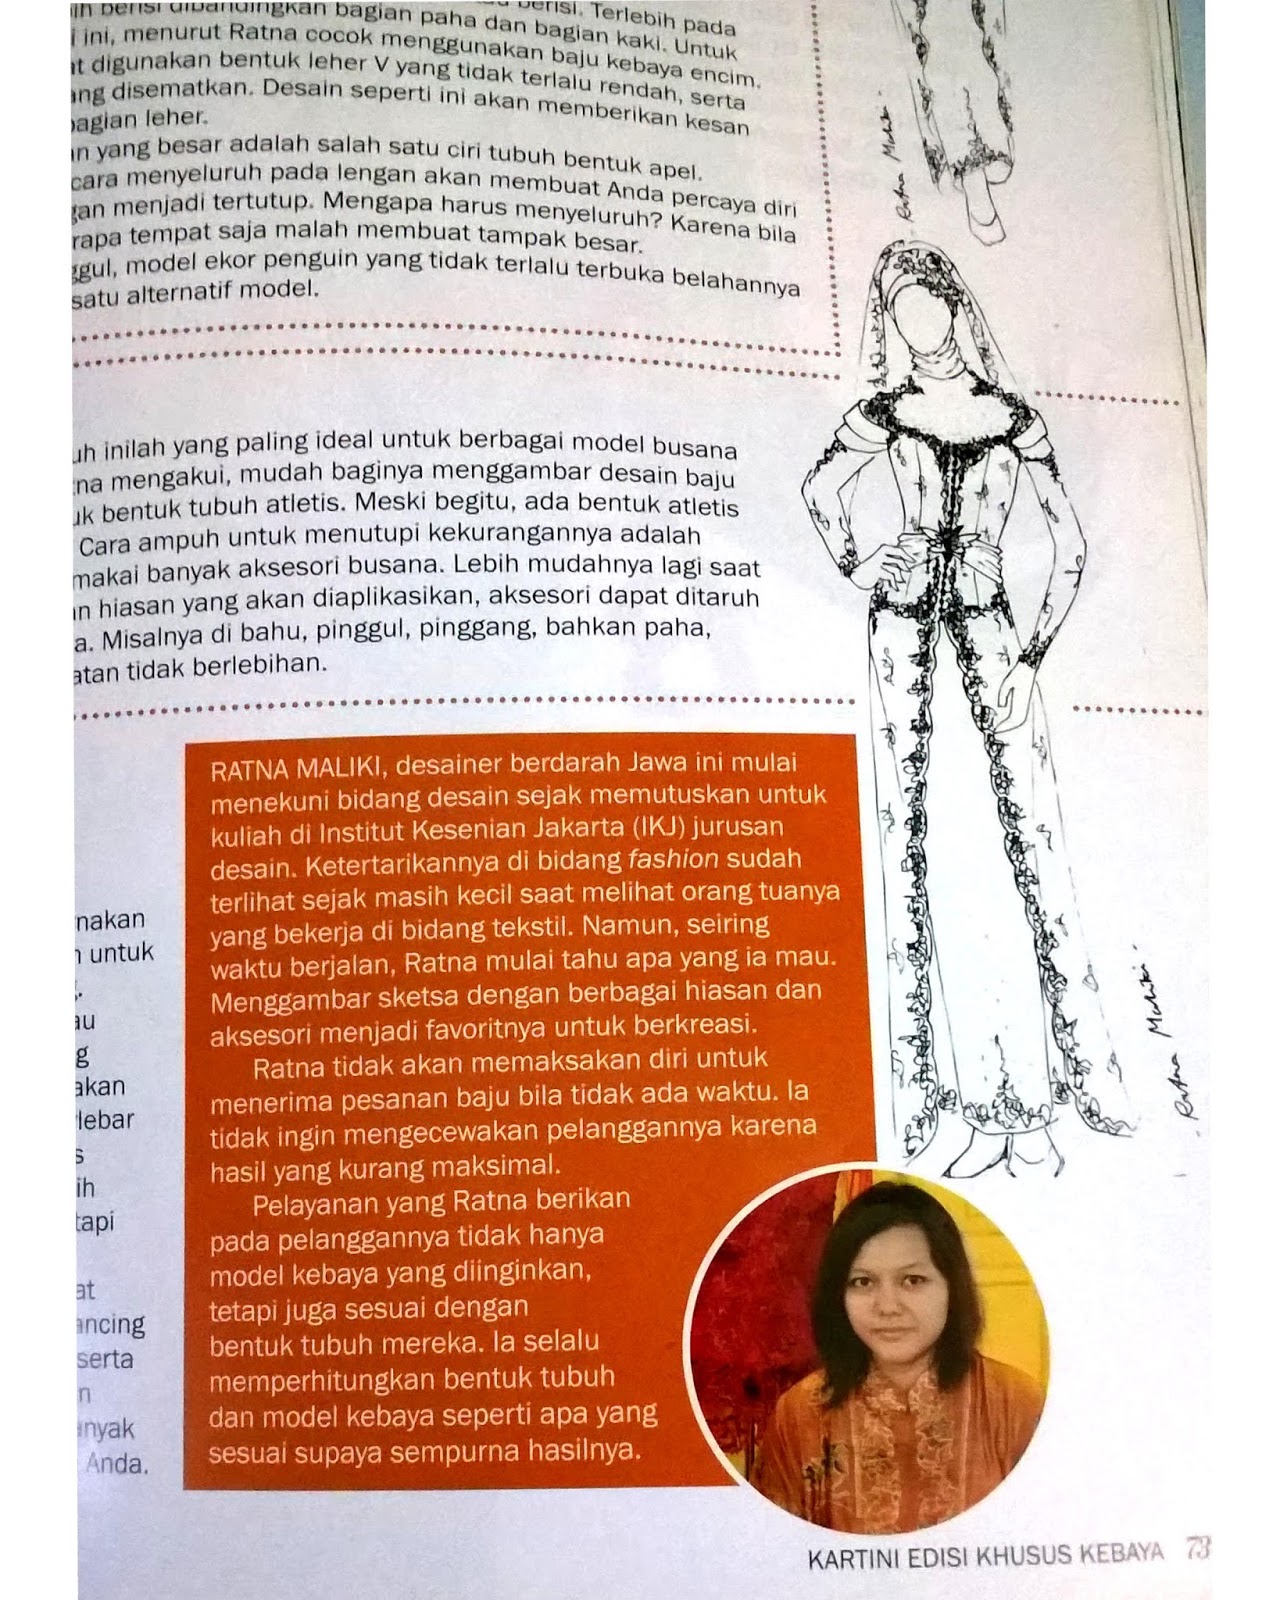 Ratna Maliki Design at Majalah Wanita Kartini